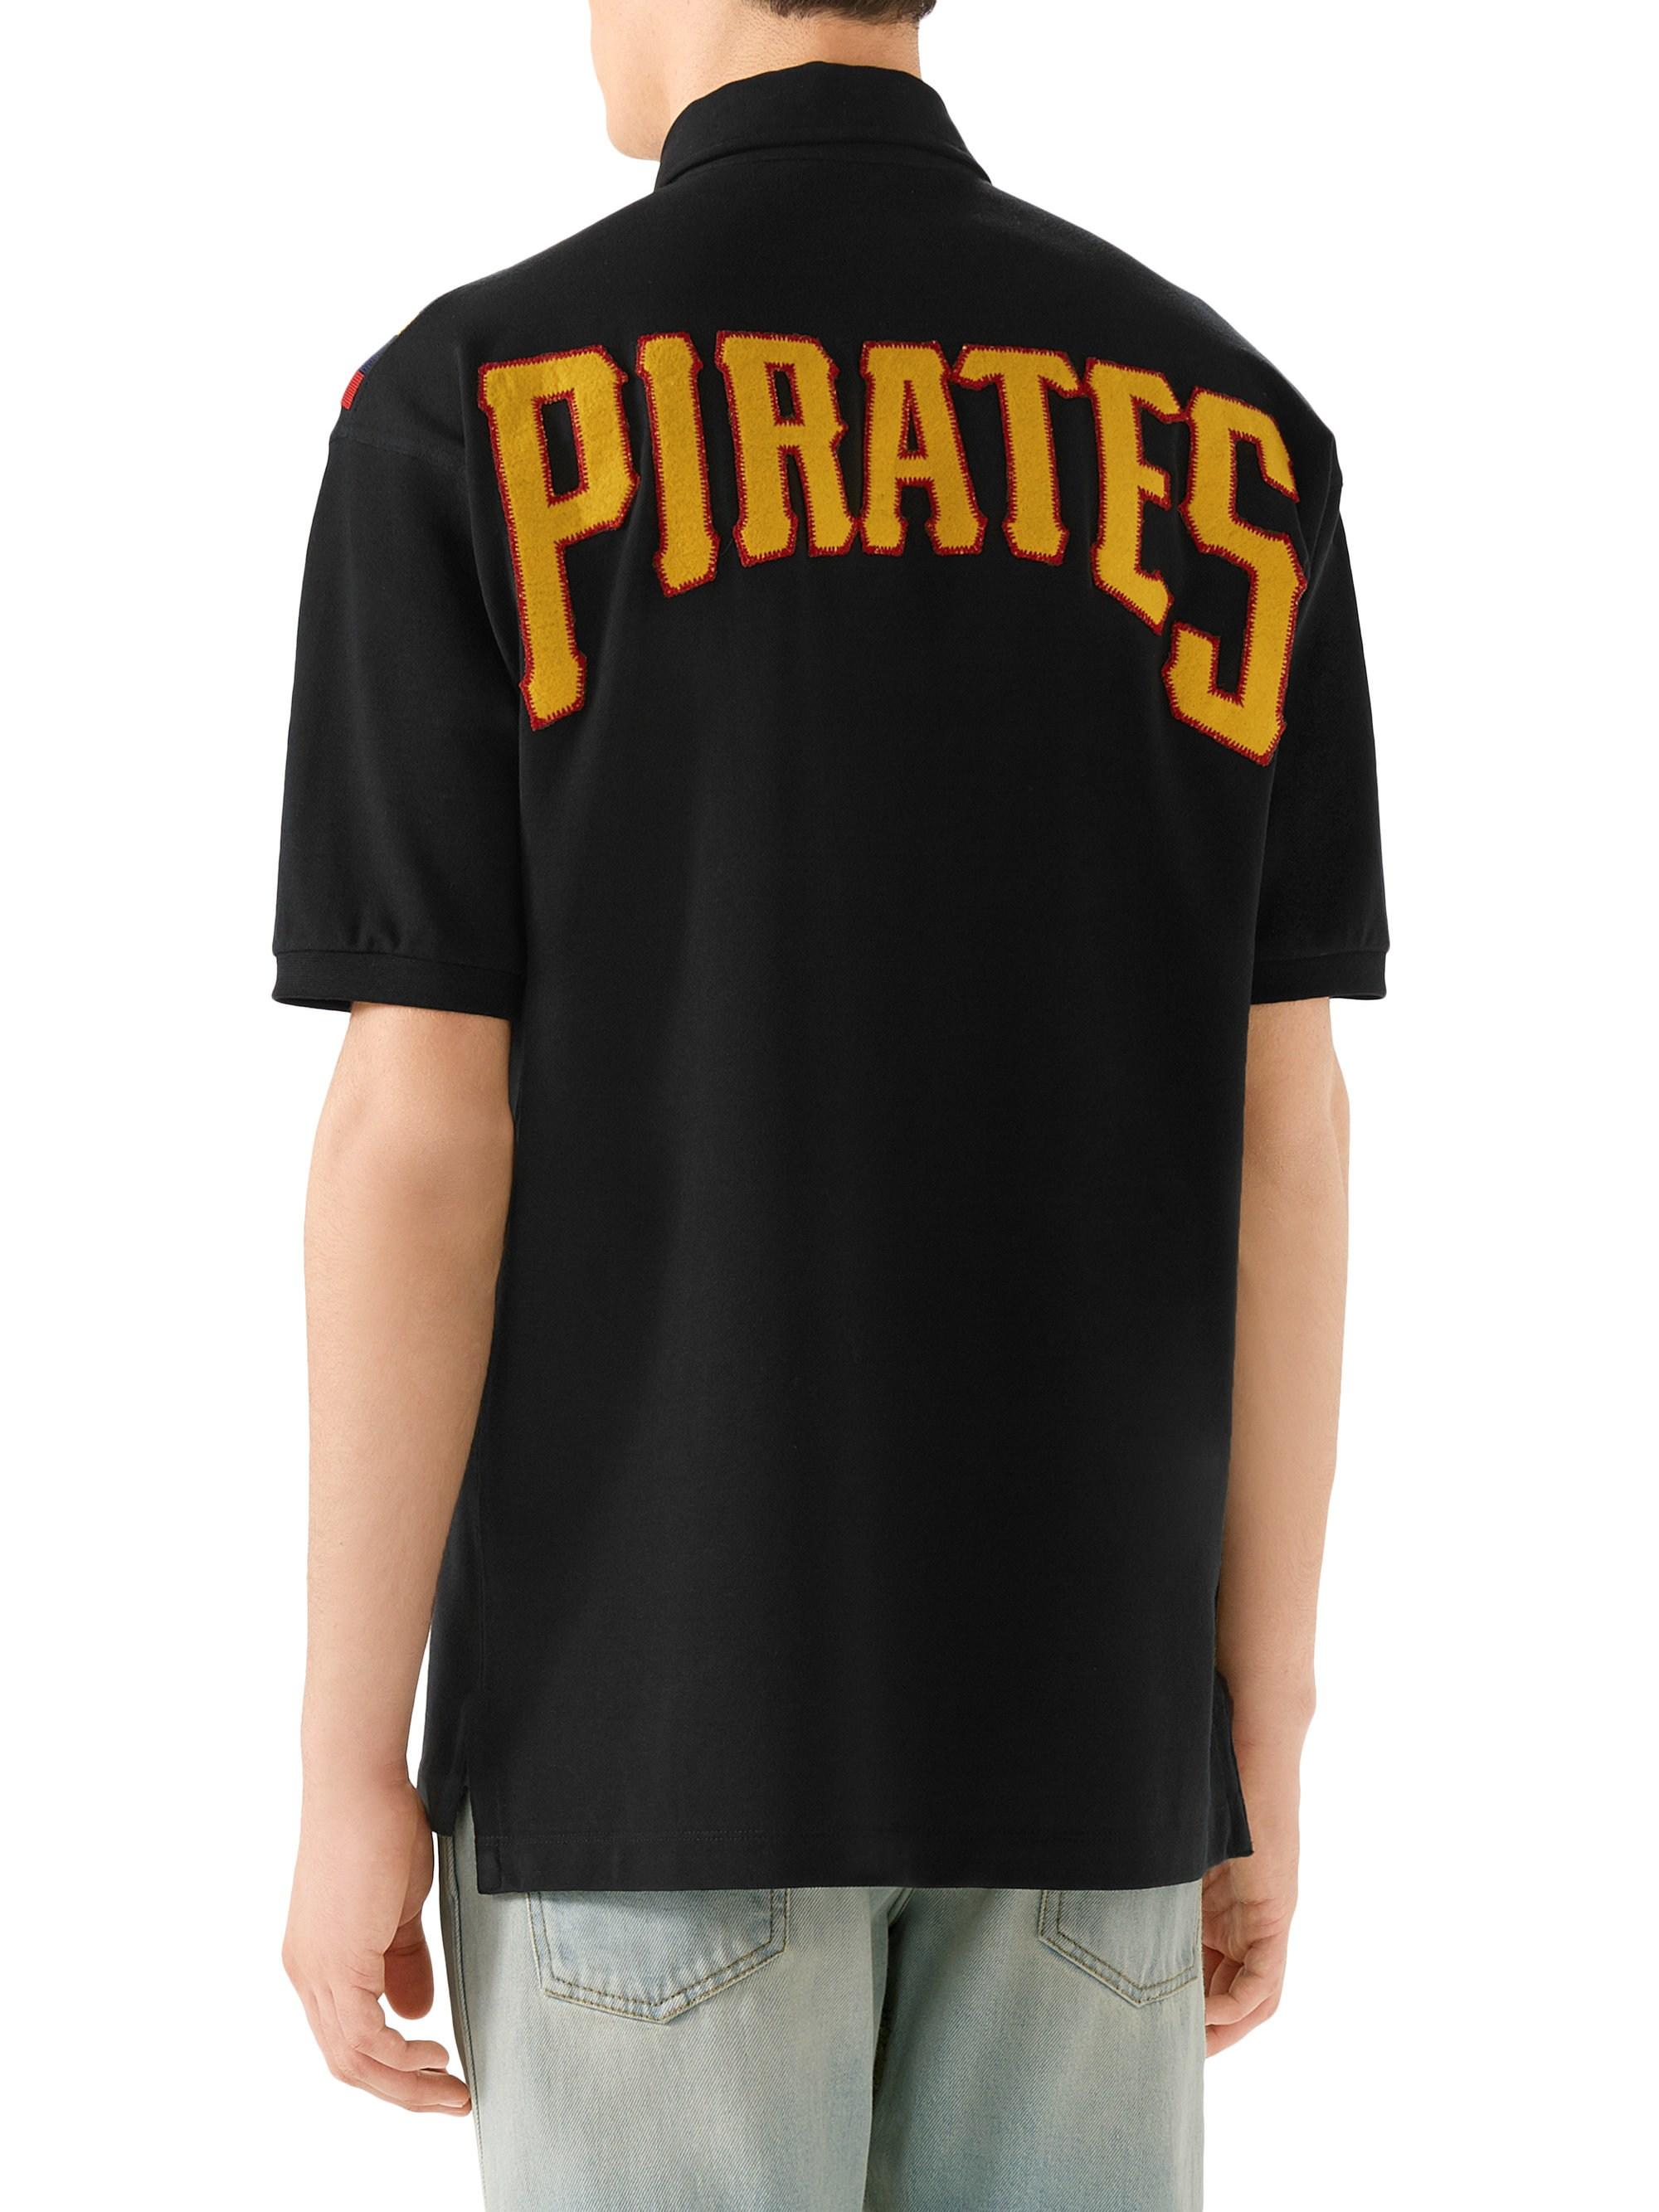 gucci pirates shirt